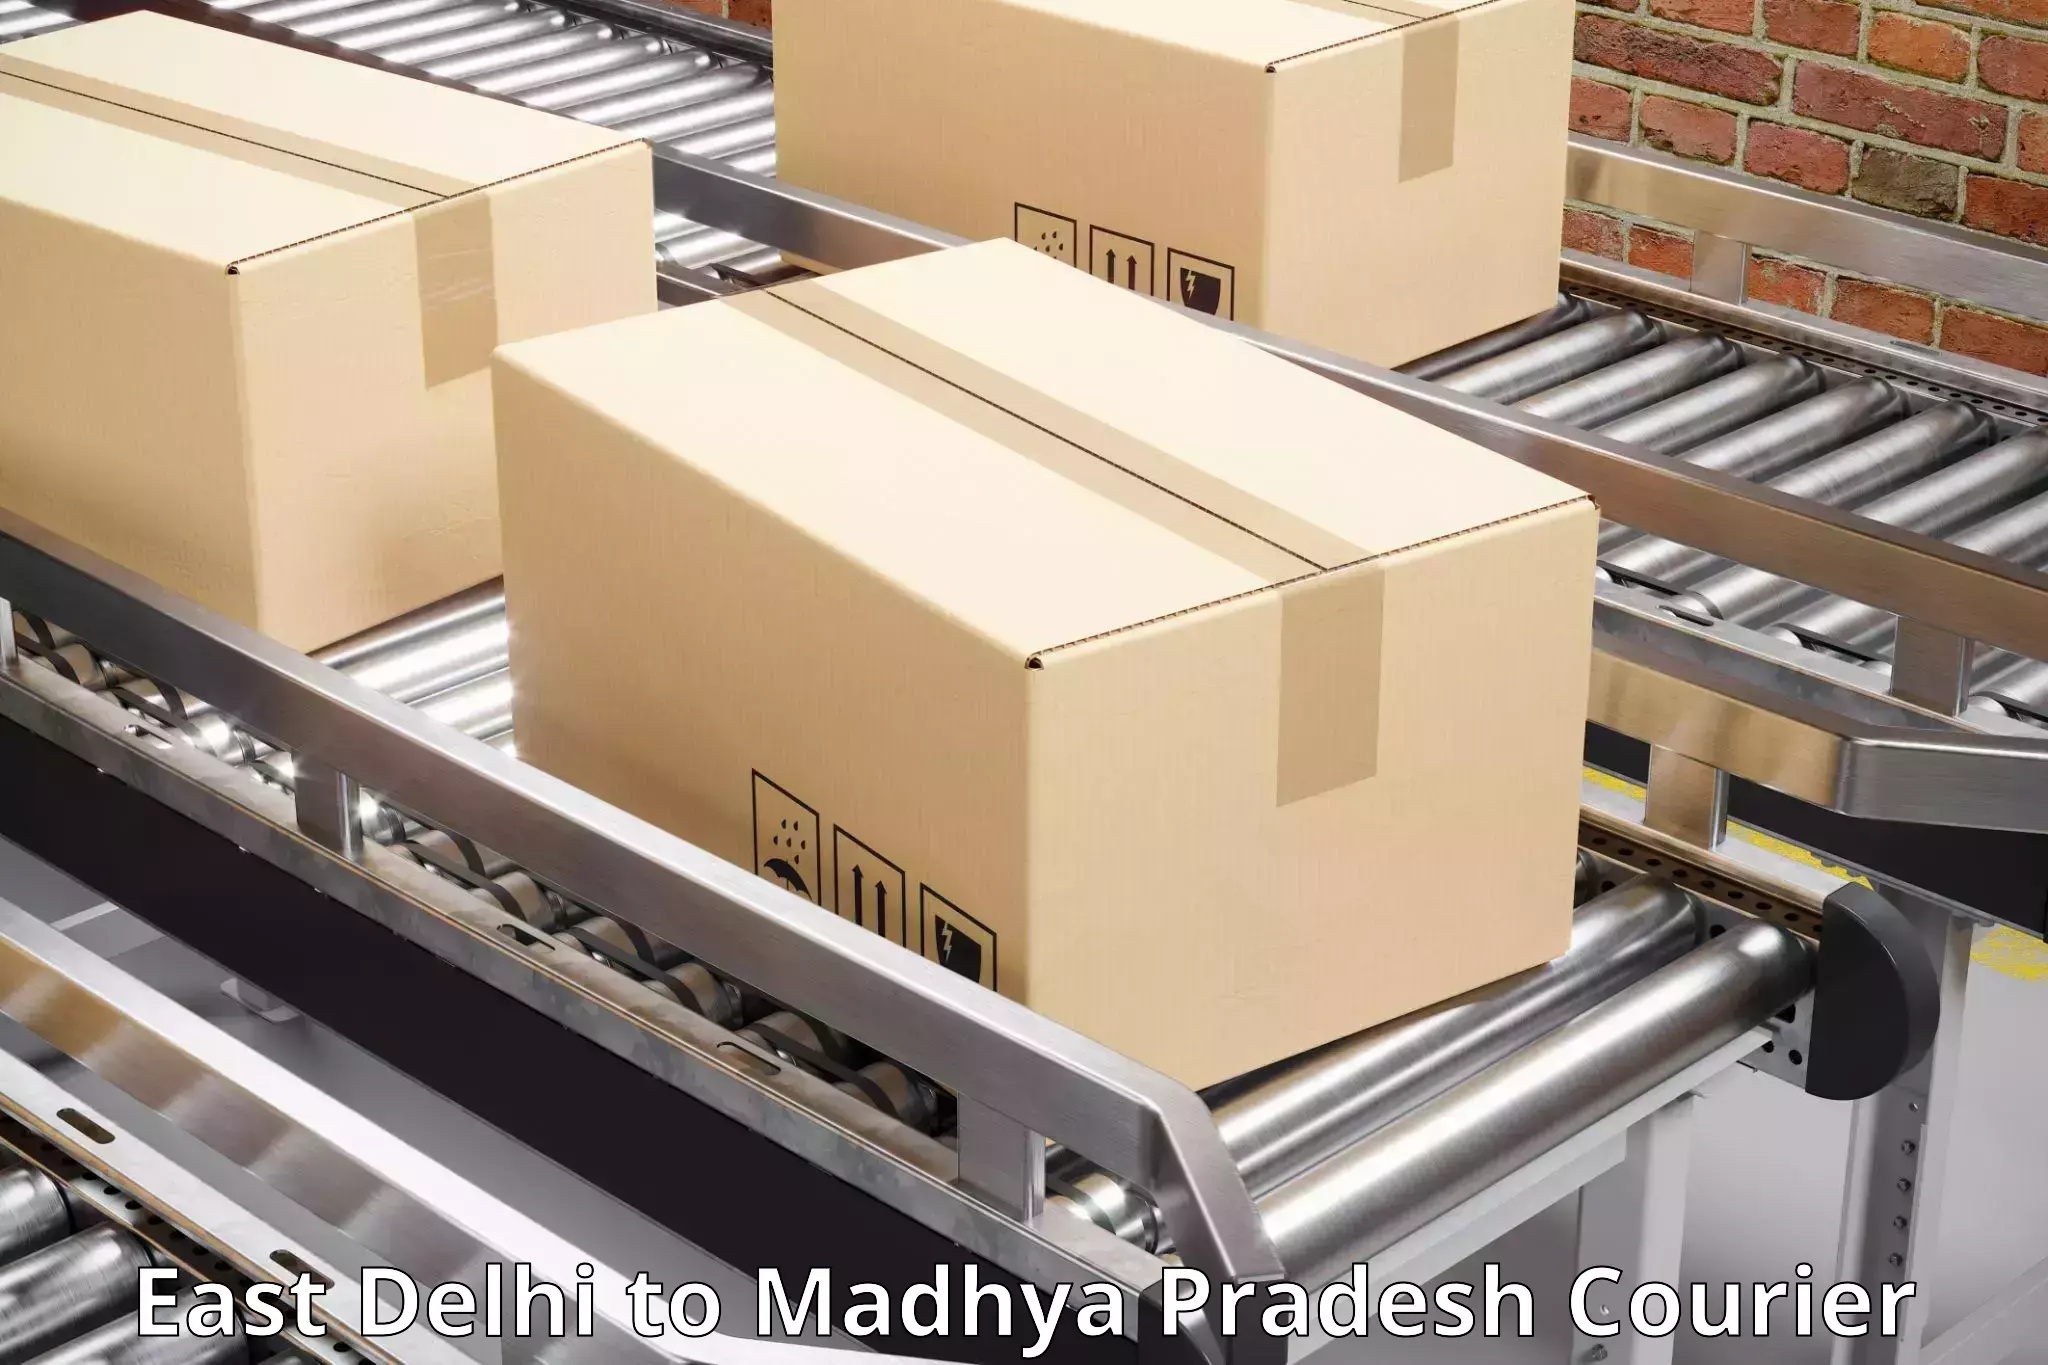 Small parcel delivery in East Delhi to Shahpura Dindori